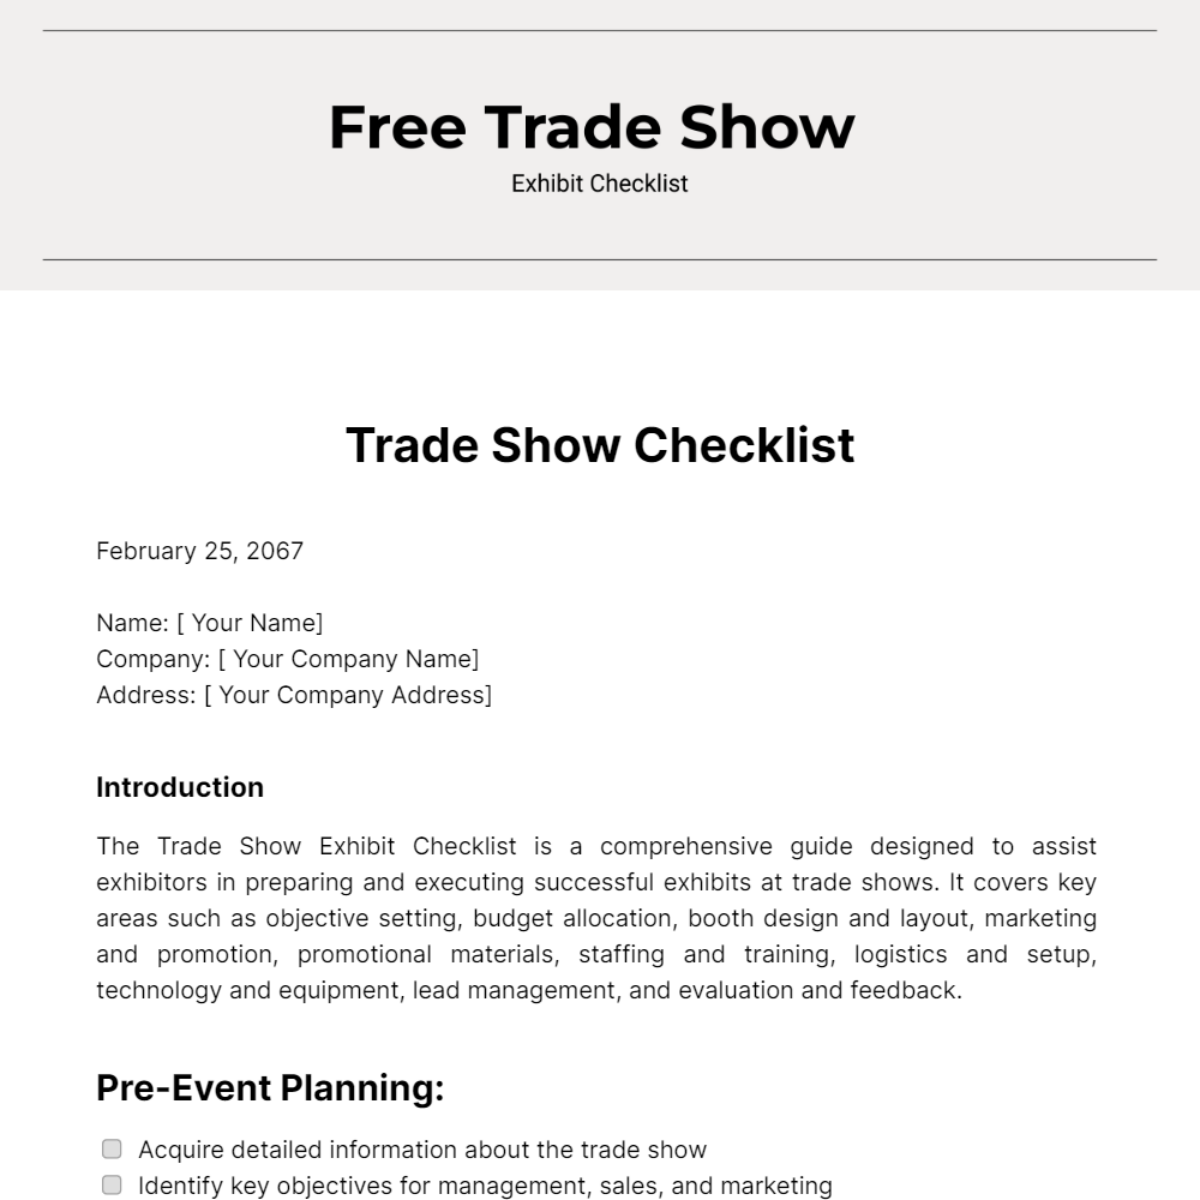 Free Trade Show Exhibit Checklist Template